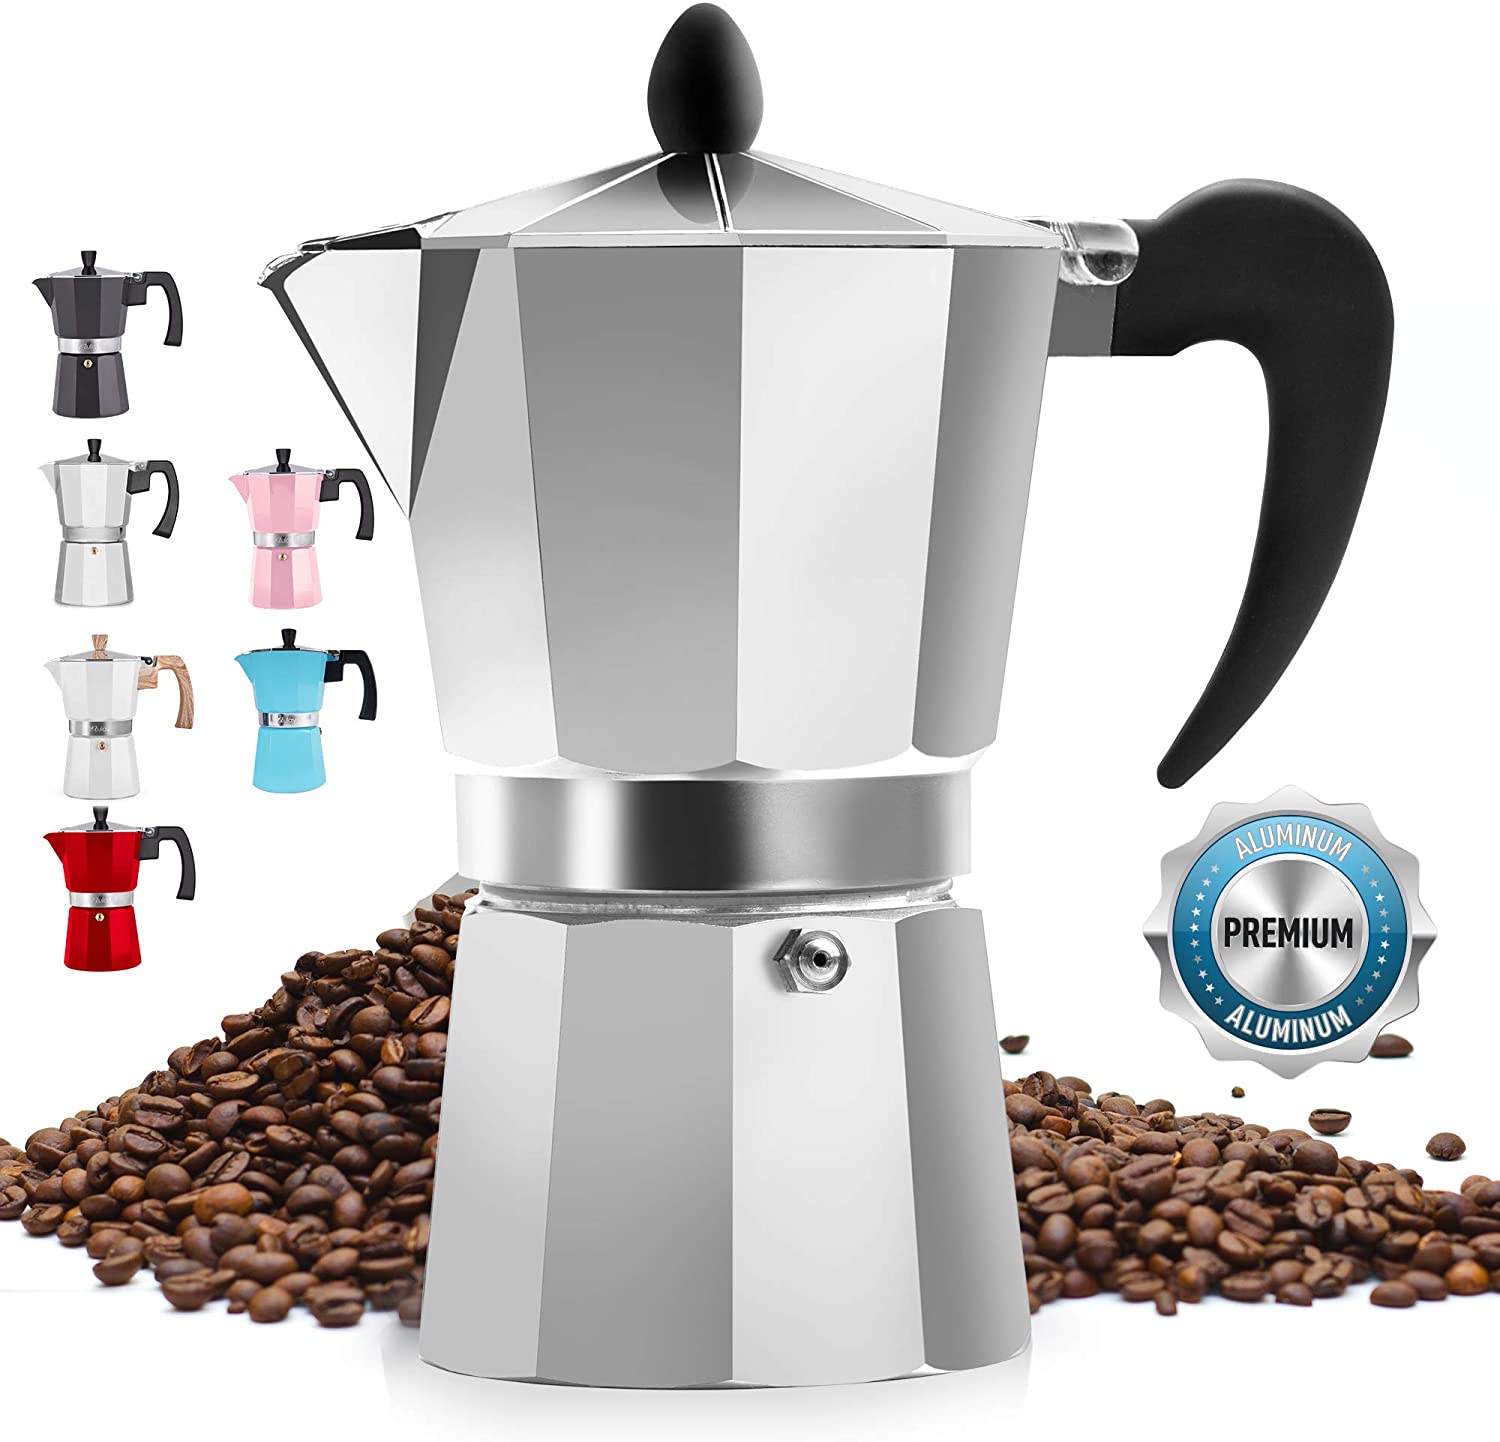 https://www.dontwasteyourmoney.com/wp-content/uploads/2020/11/zulay-kitchen-classic-stove-top-espresso-maker-stove-top-espresso-maker.jpg